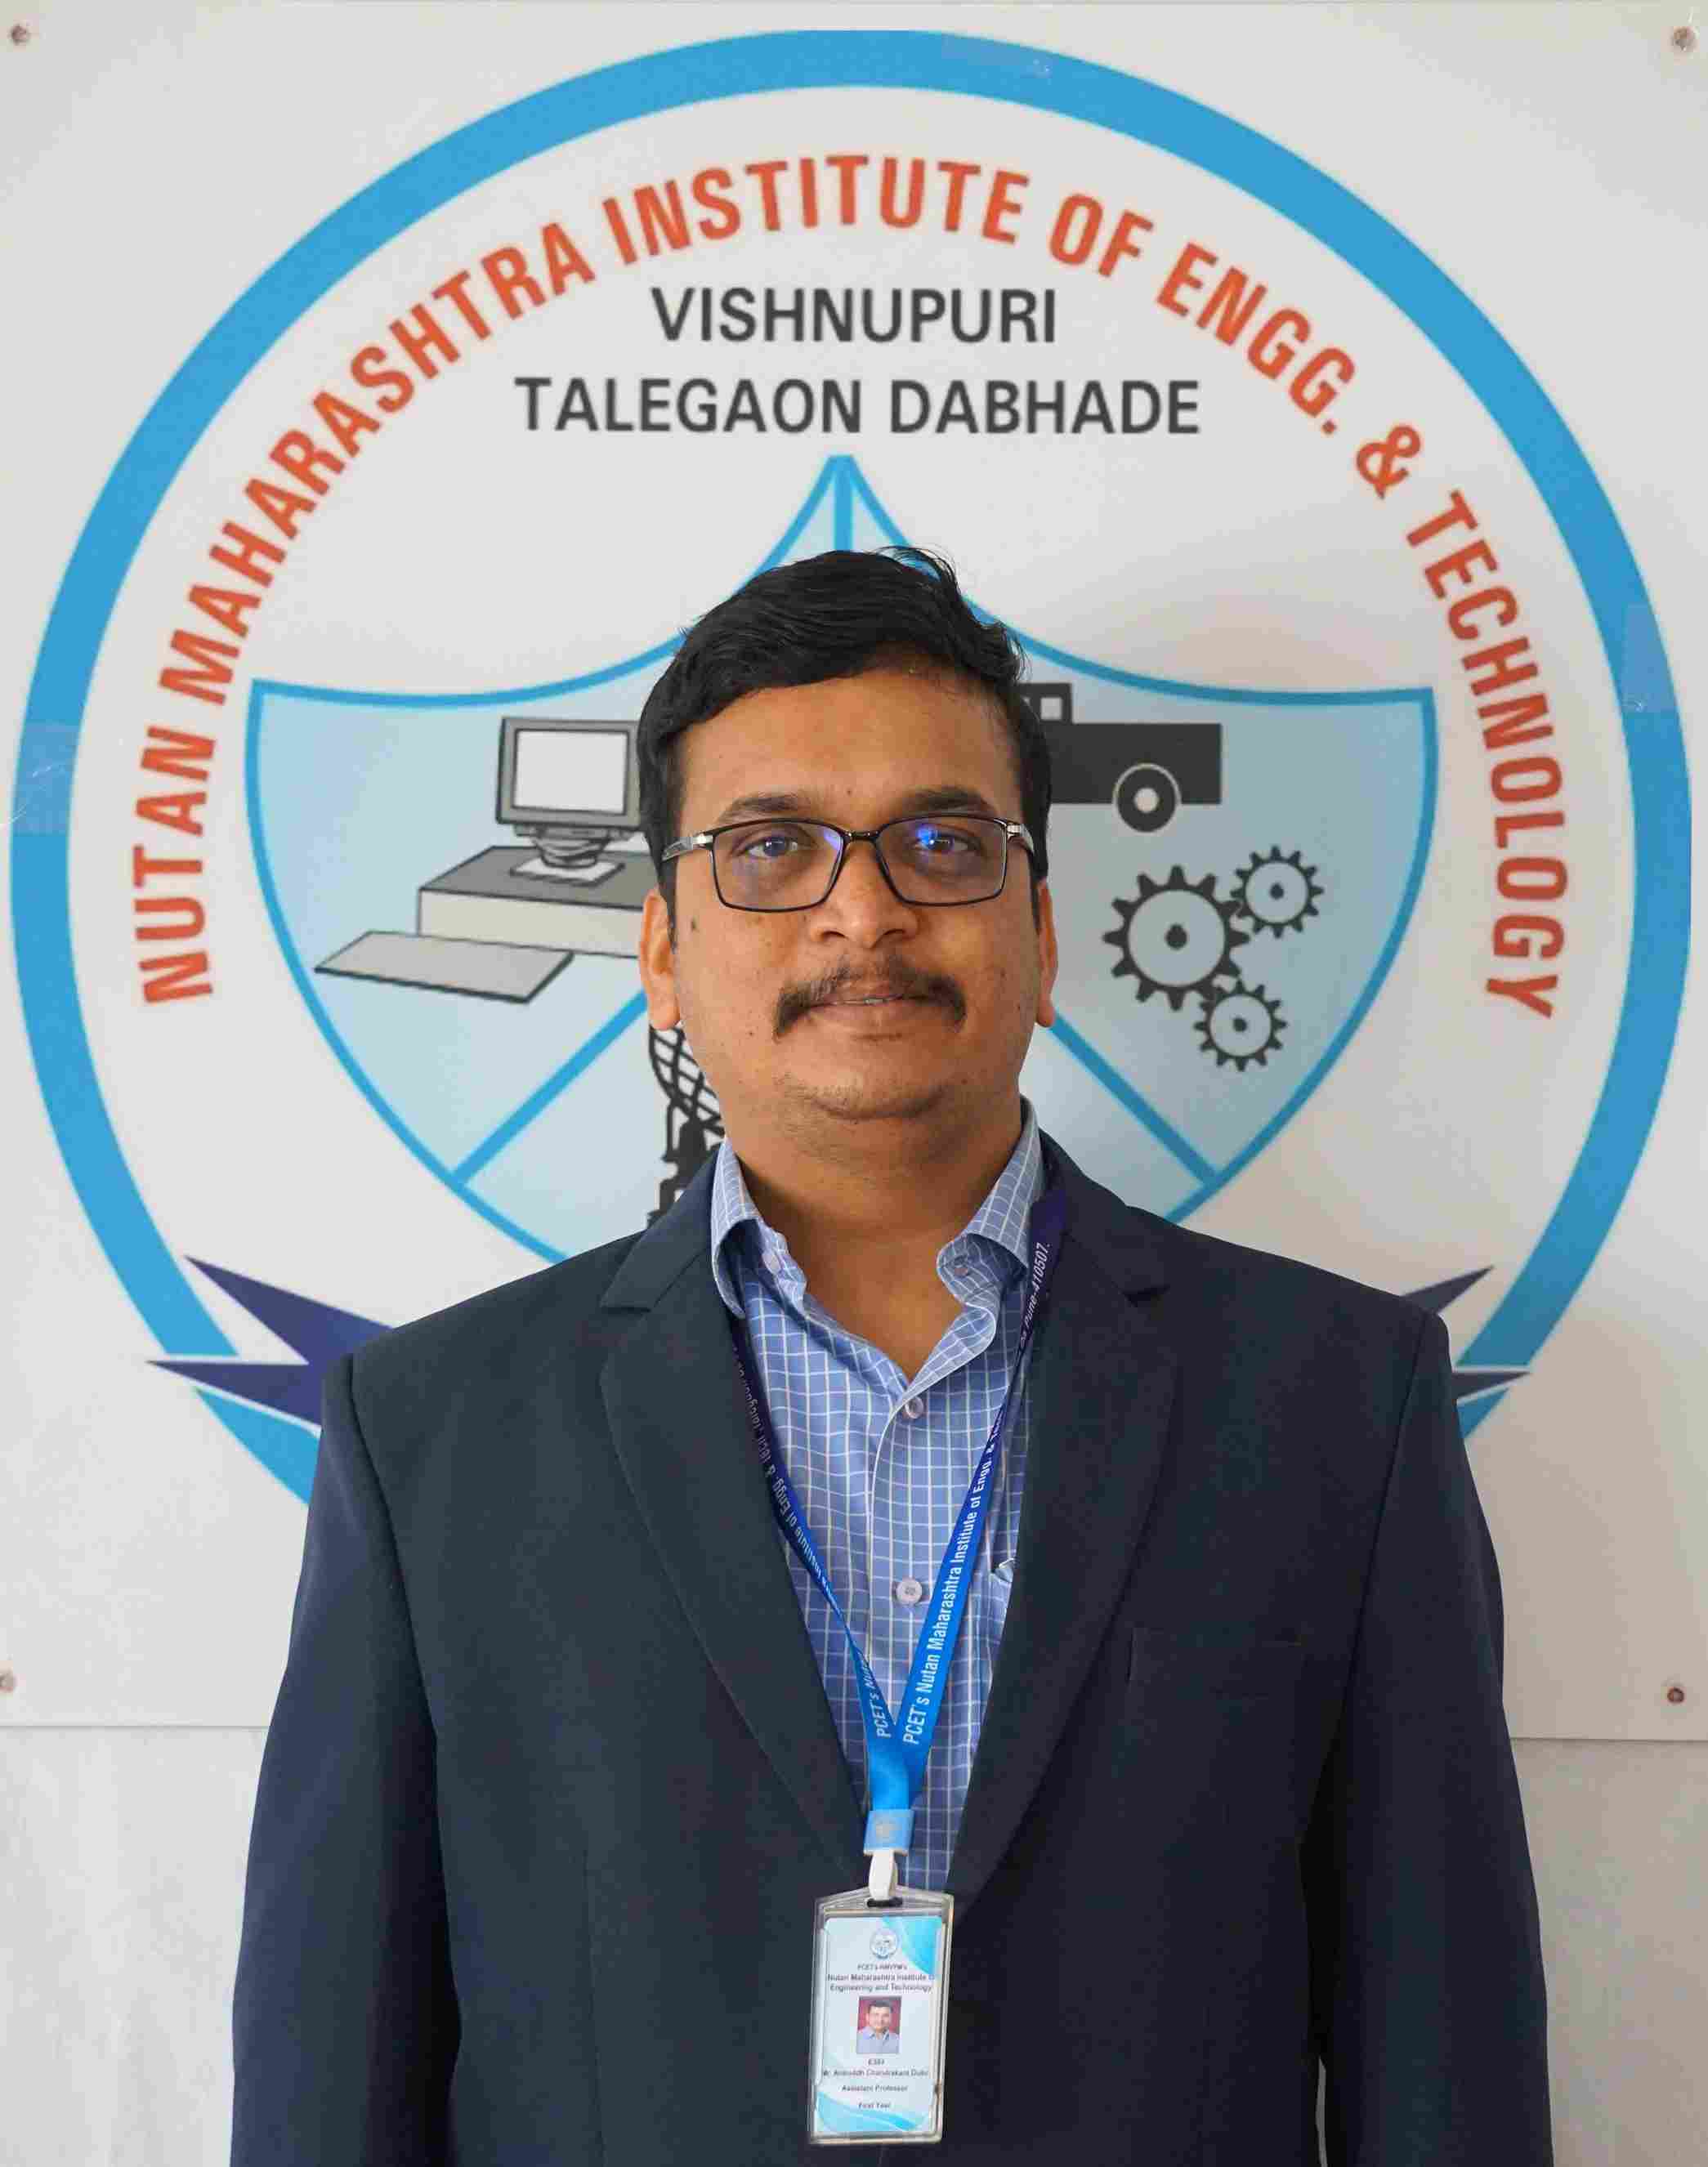 Prof. Aniruddh Dubal